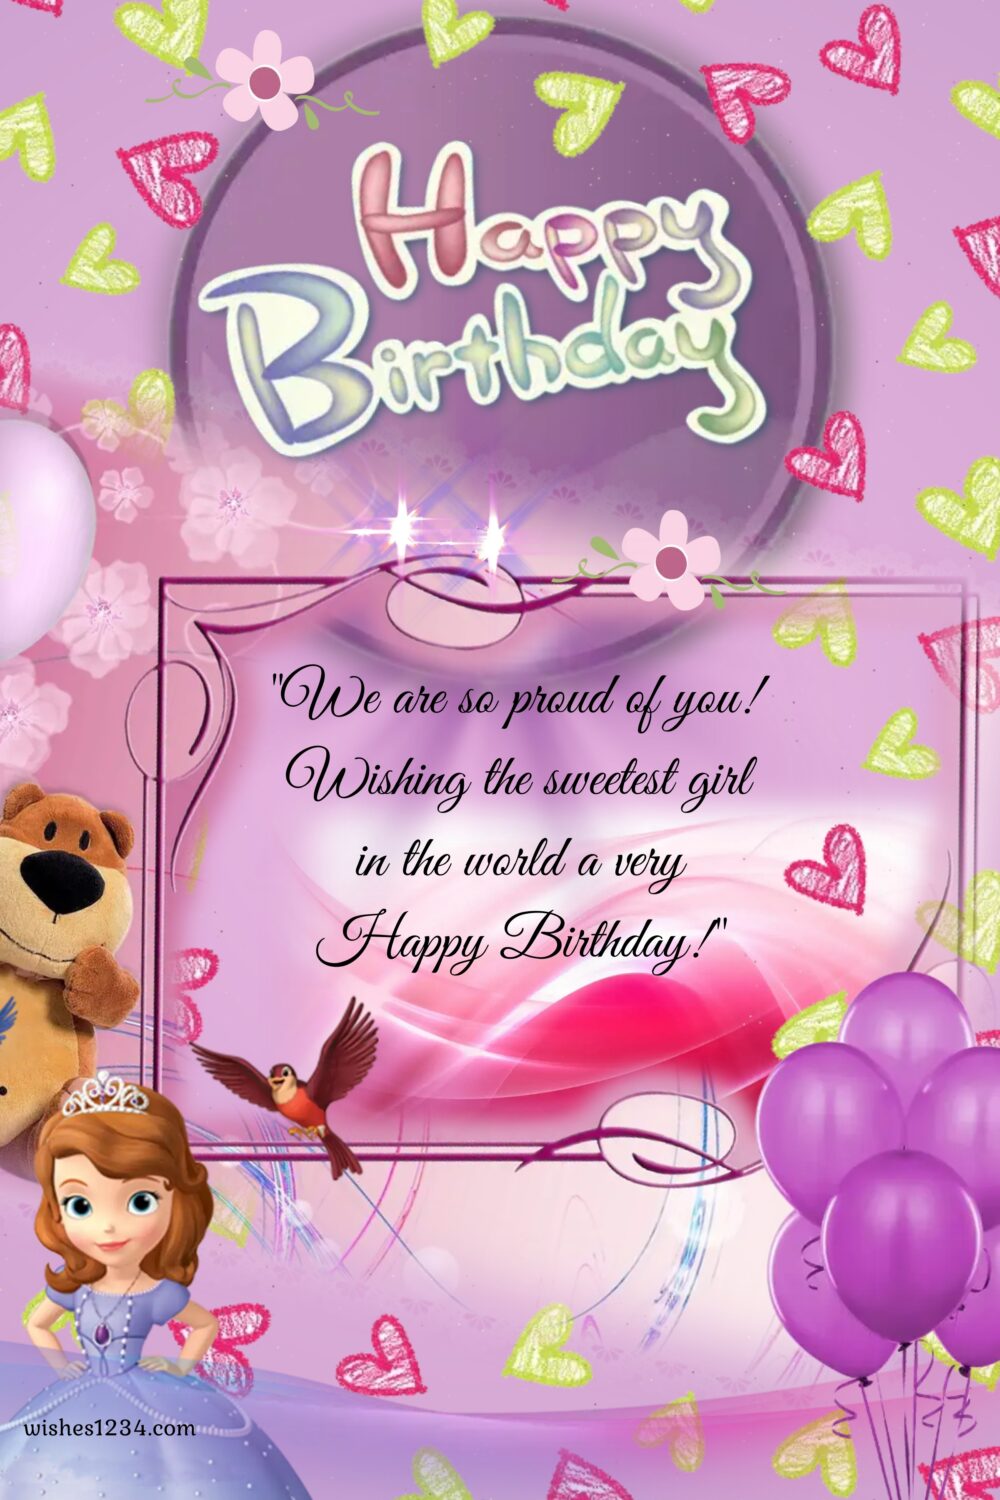 Princess and teddy bear, Kids birthday | Happy Birthday wishes for kids.